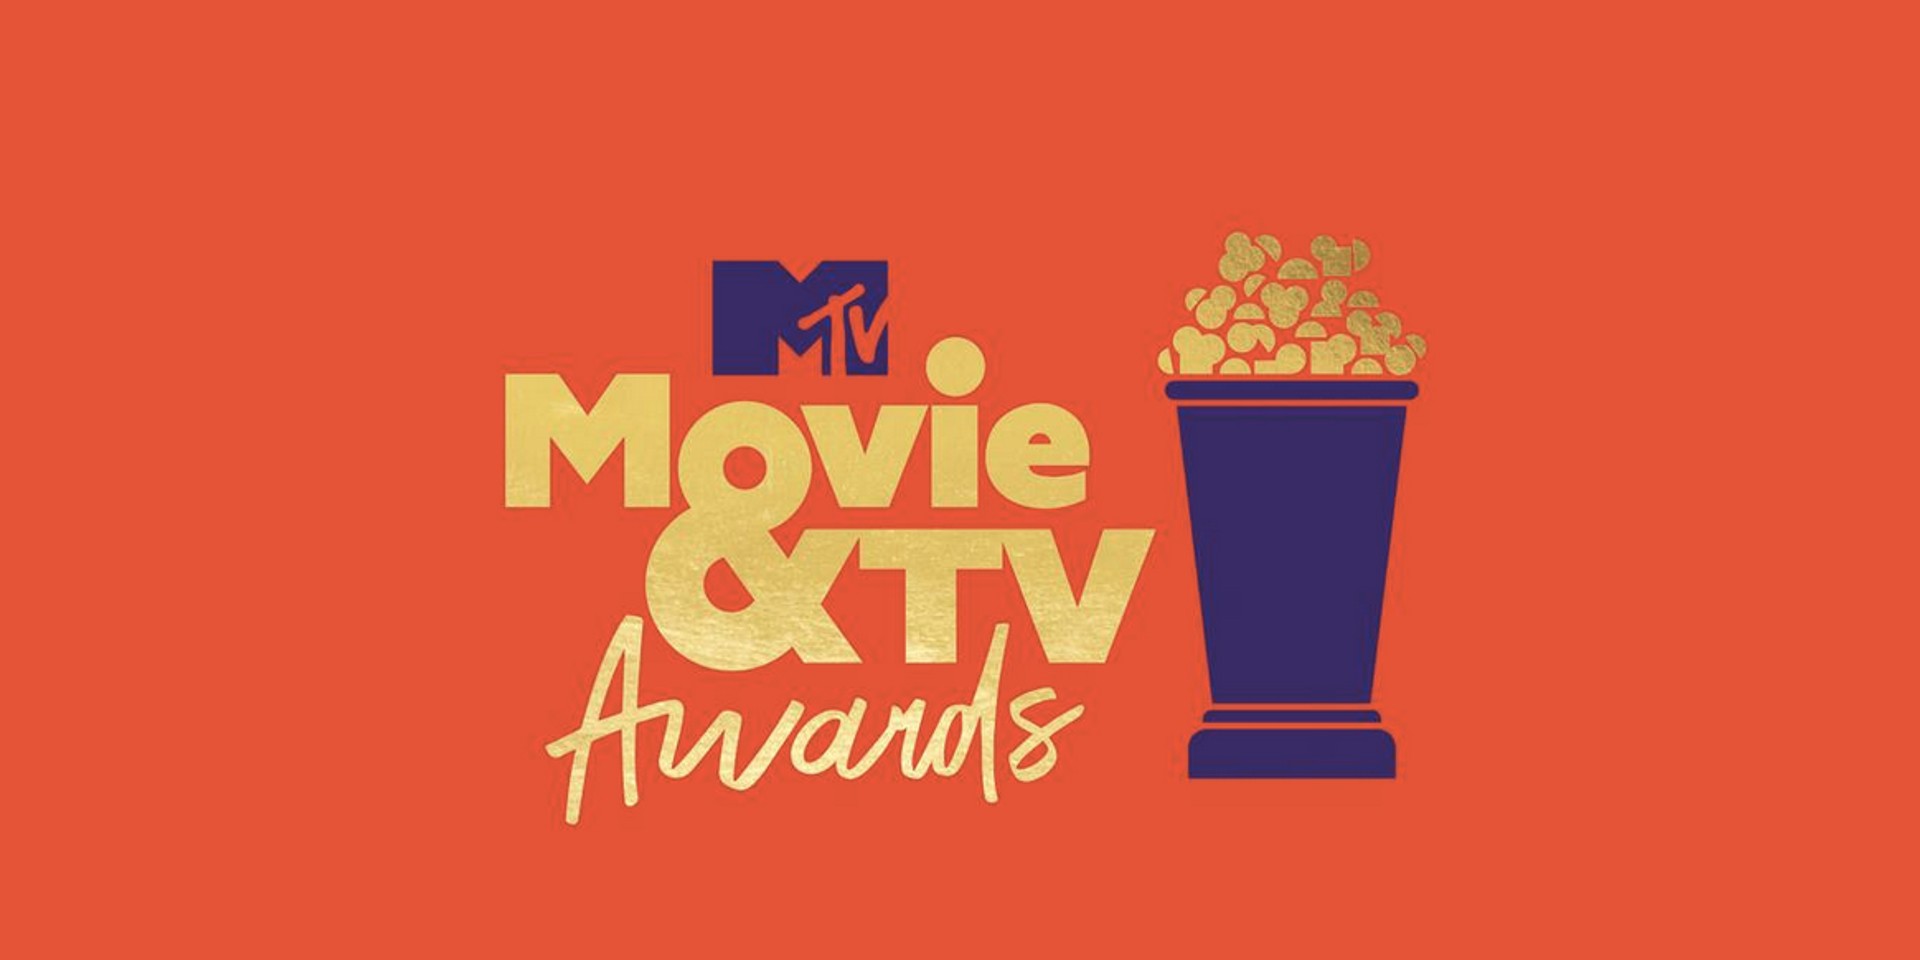 Bridgerton, BTS, Taylor Swift, WandaVision, and more are nominated at the 2021 MTV Movie & TV Awards 